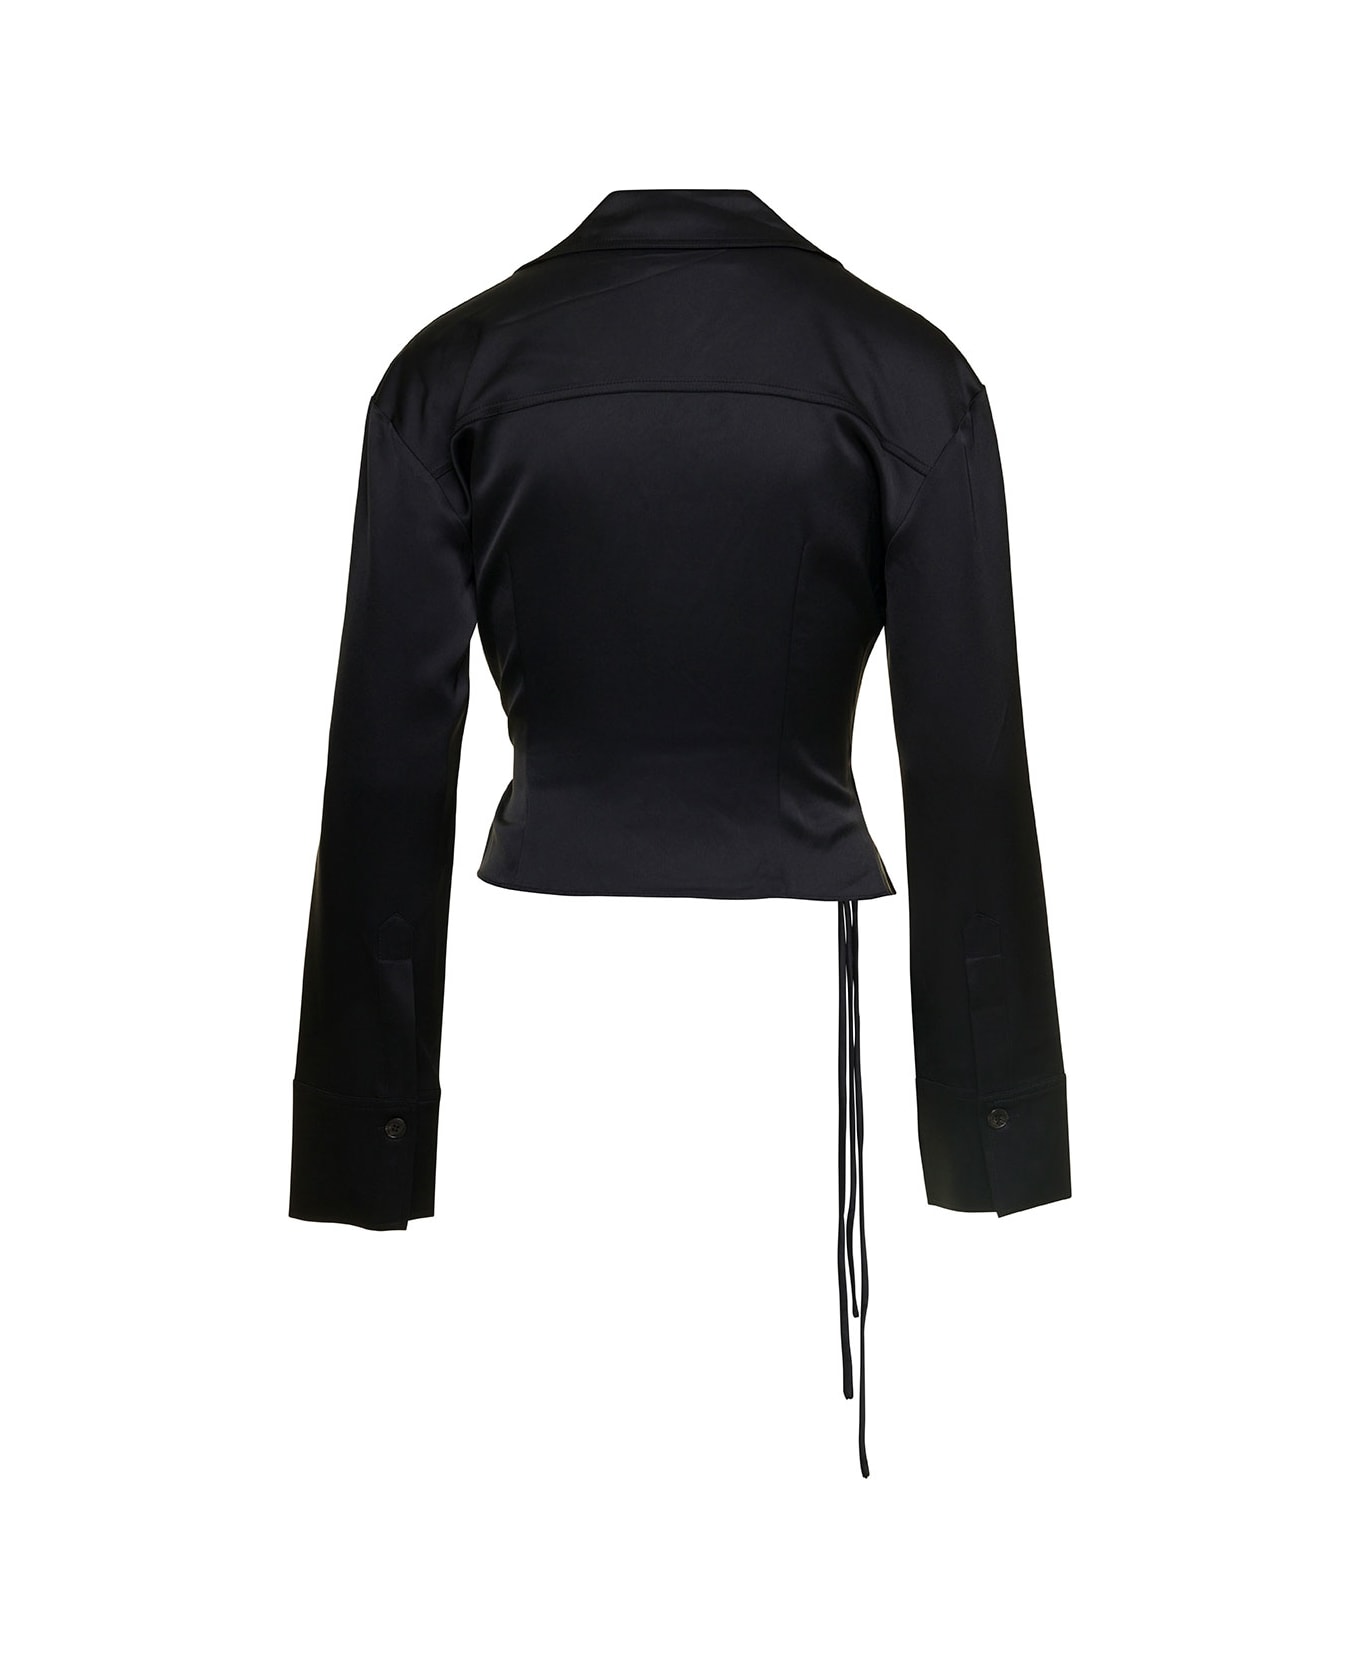 Nanushka Black Shirt With Cuban Collar In Satin Fabric Woman - Black